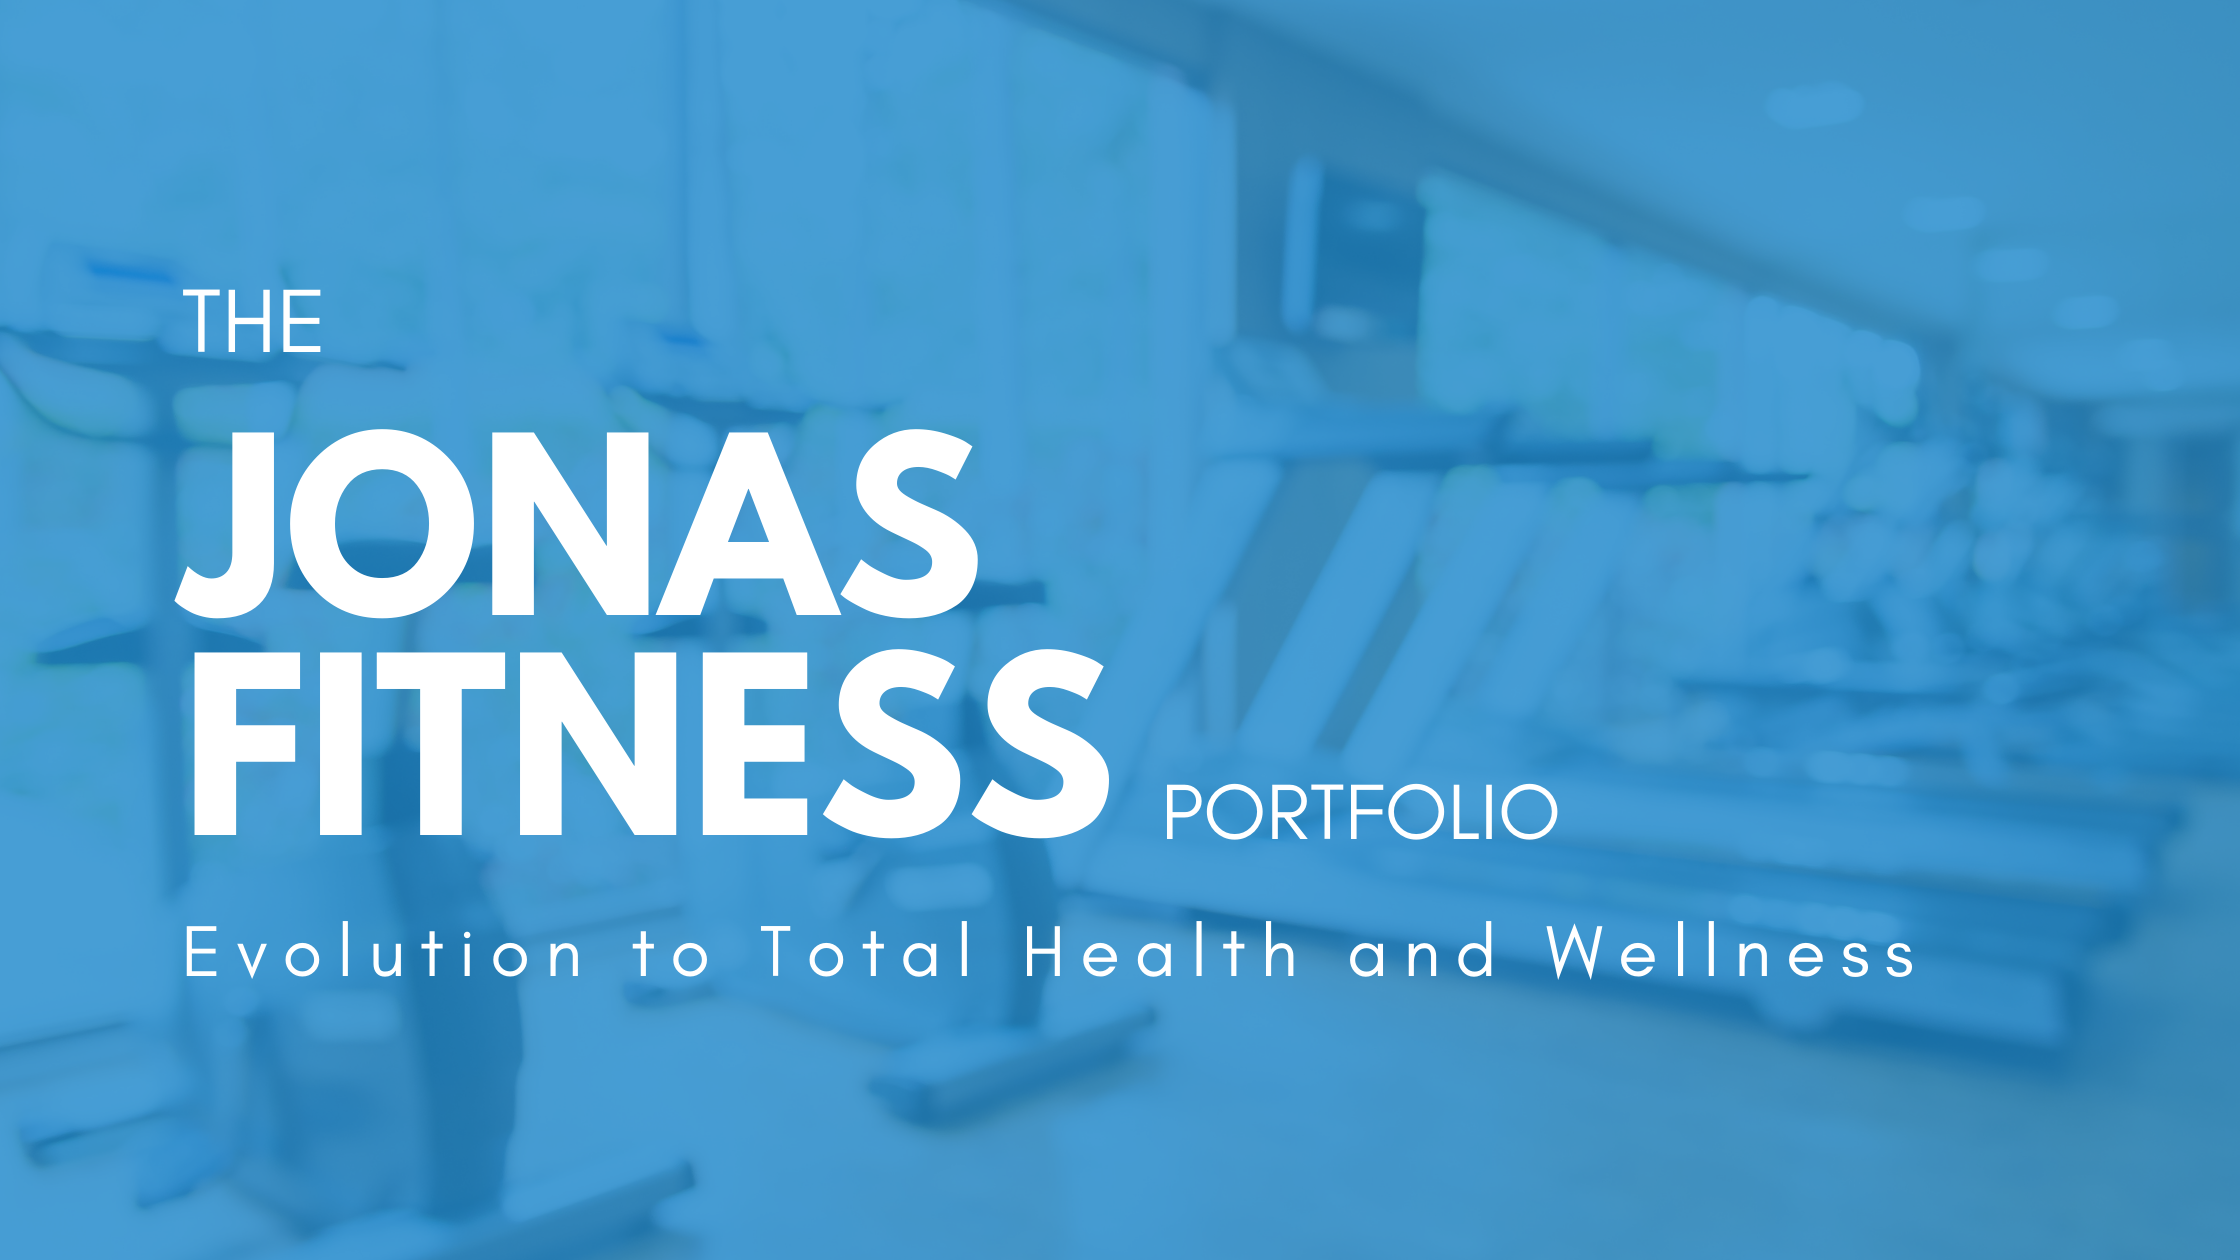 The Jonas Fitness Portfolio – Evolution to Total Health and Wellness